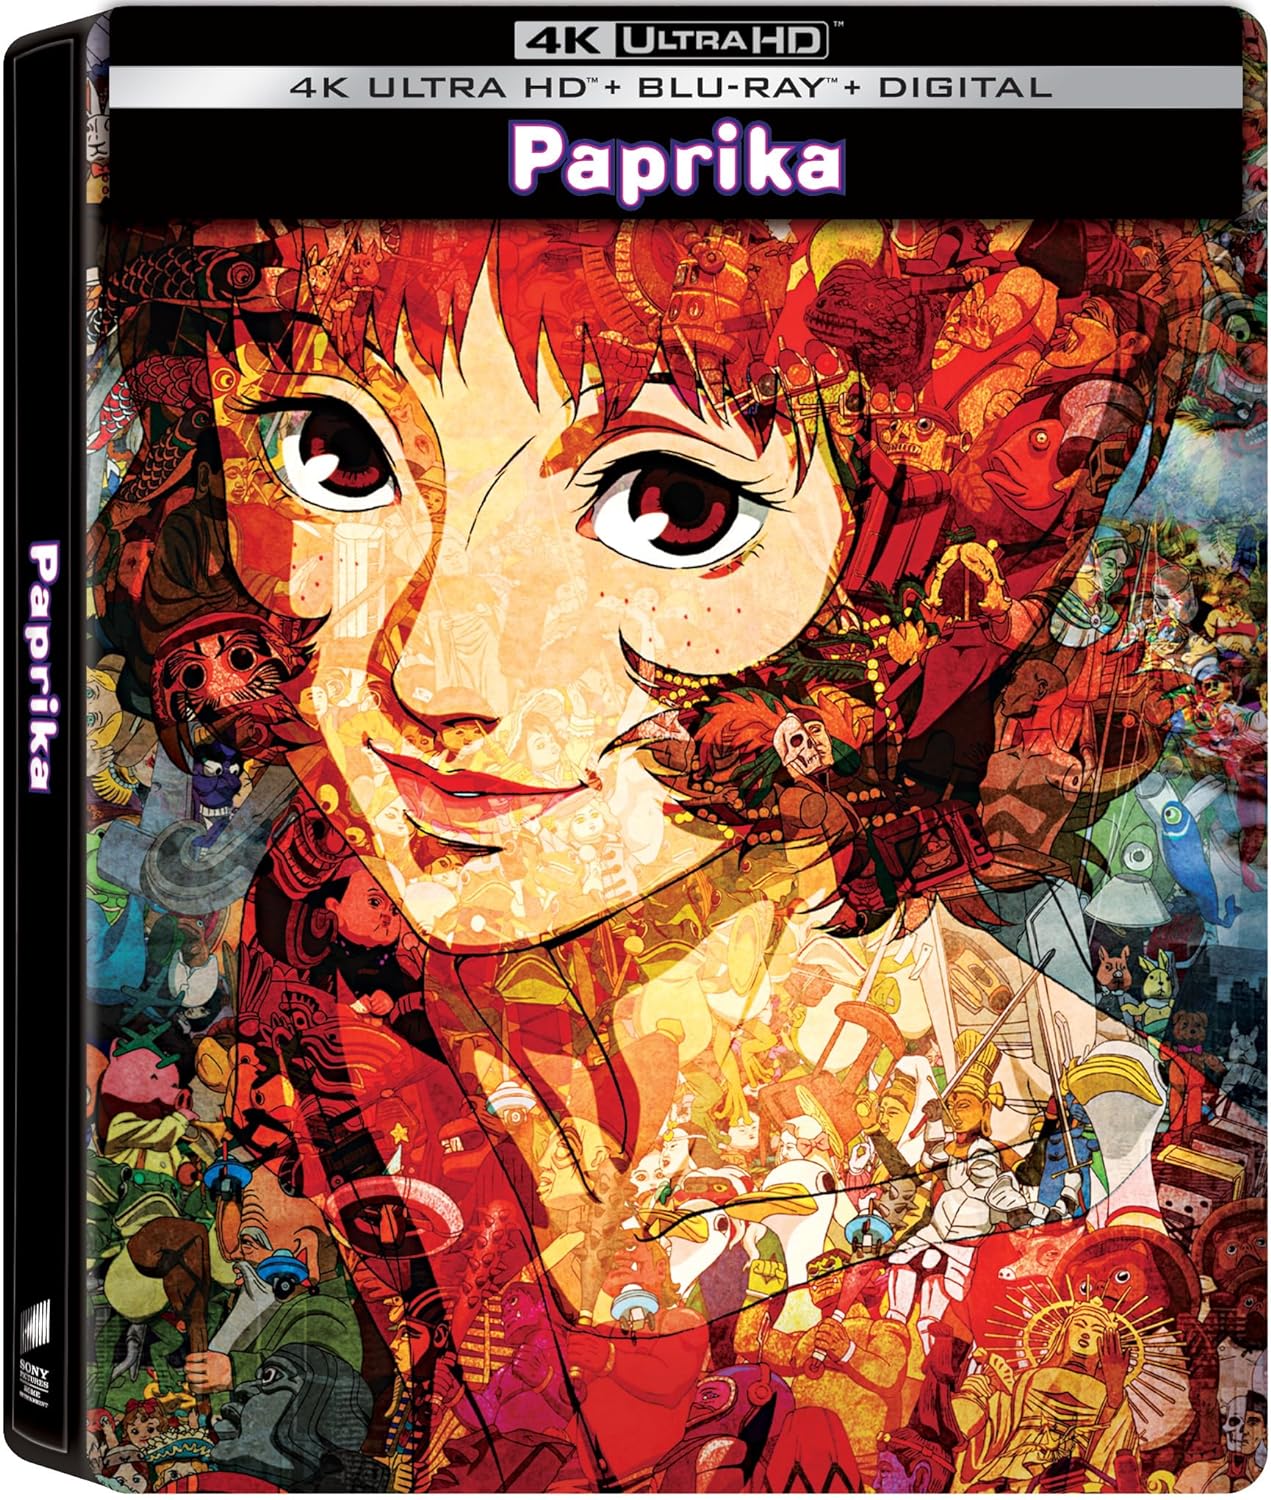 Paprika - Limited Edition – 4K UHD + Blu-ray + Digital (SteelBook) $30.35